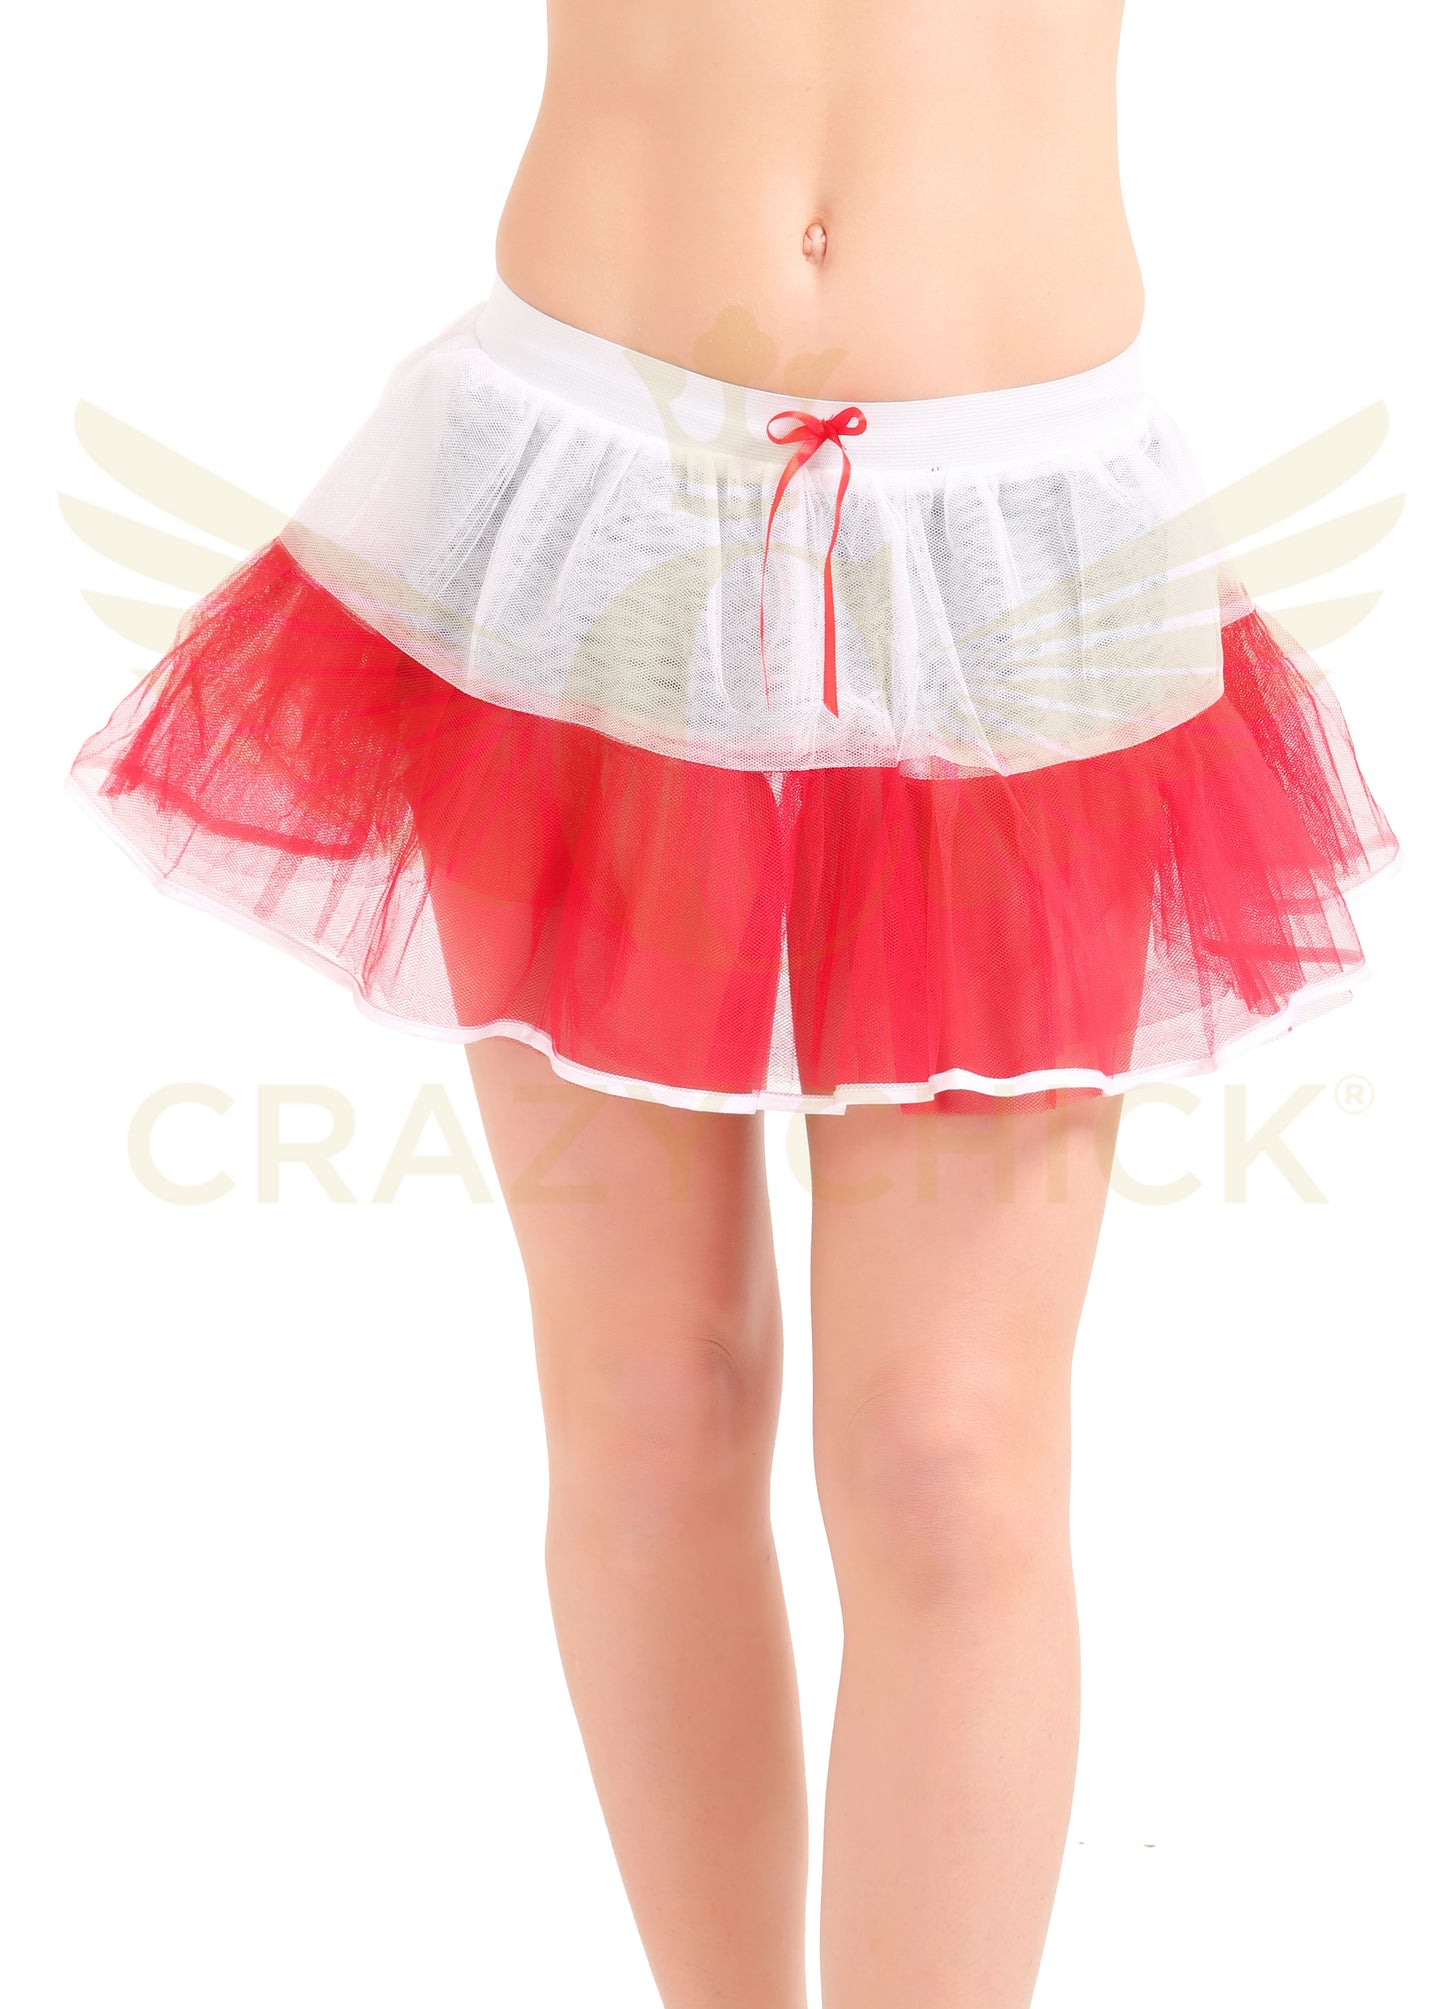 Crazy Chicks Adult 4 Layer Tutu Skirt